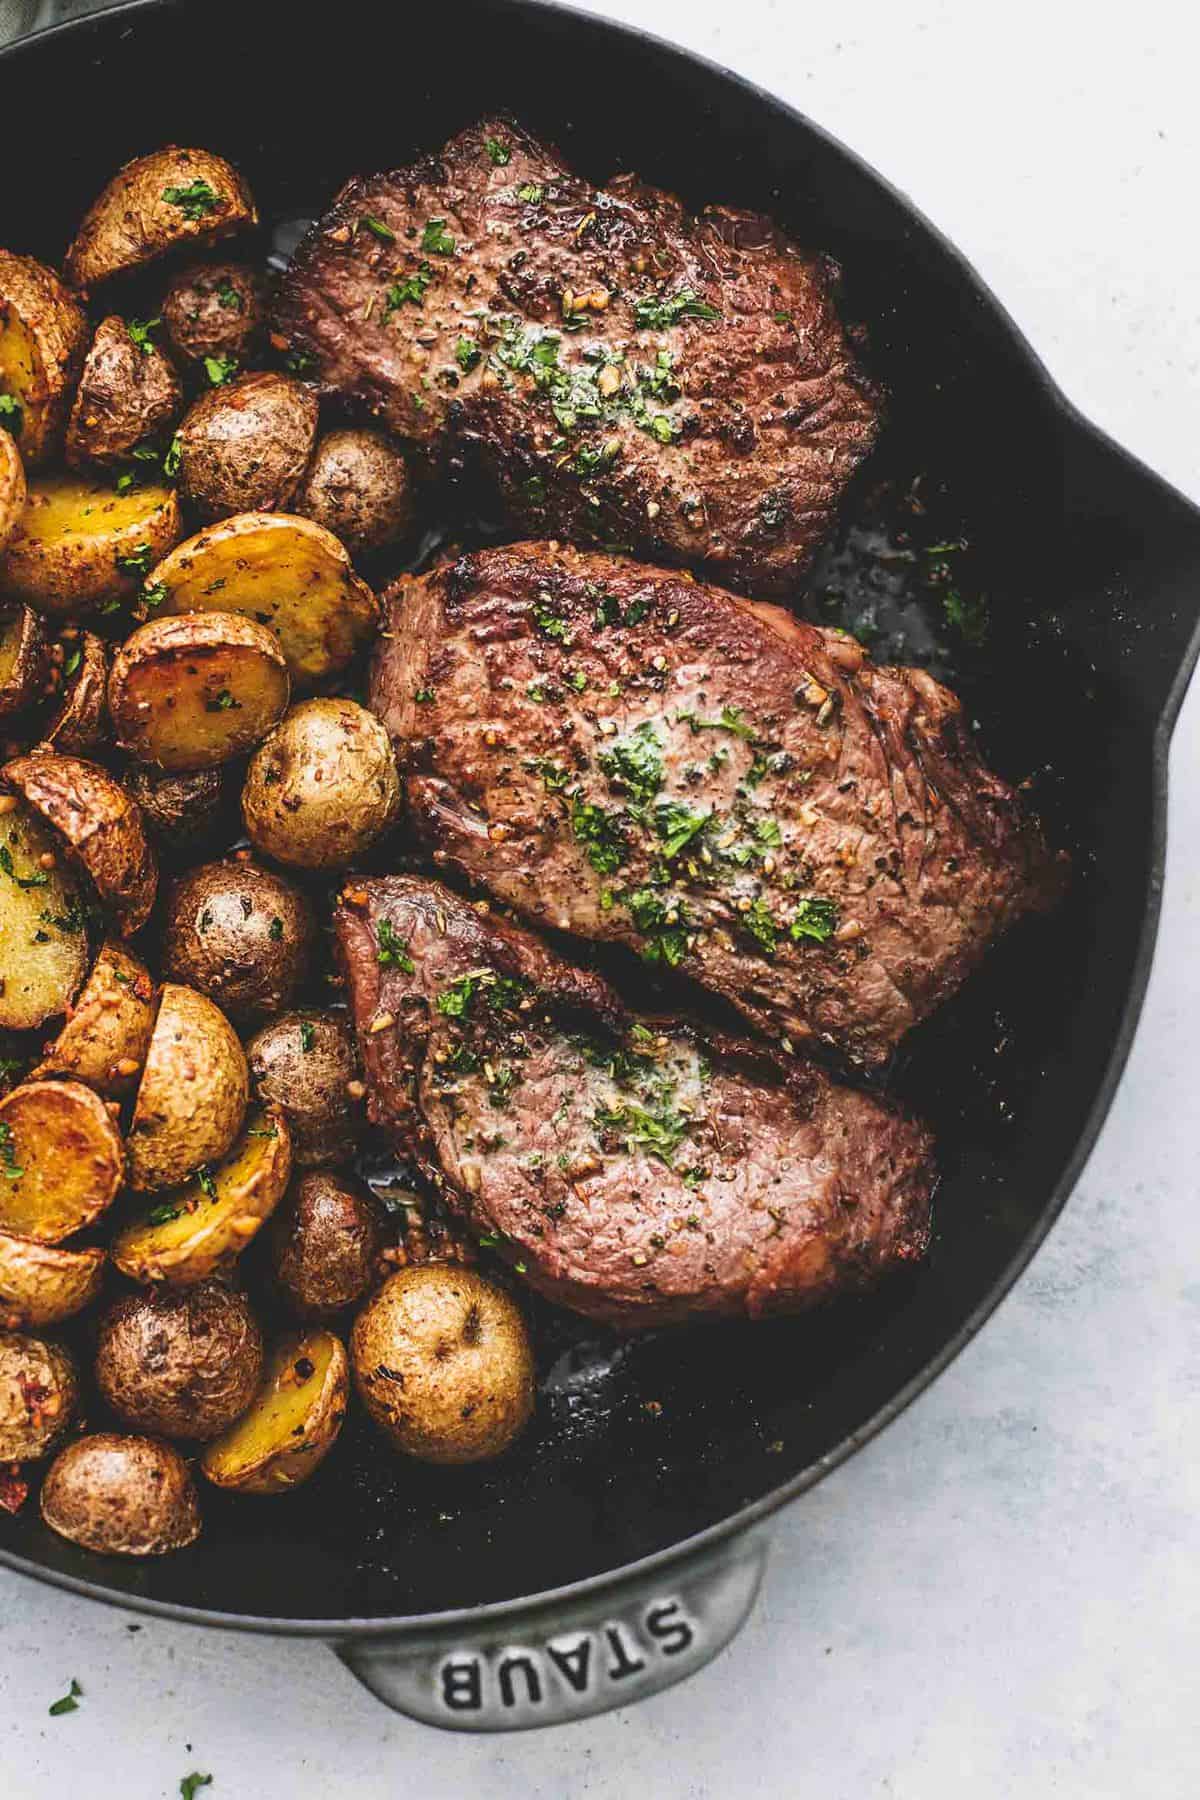 https://www.lecremedelacrumb.com/wp-content/uploads/2019/03/steak-potatoes-skillet-1-2.jpg